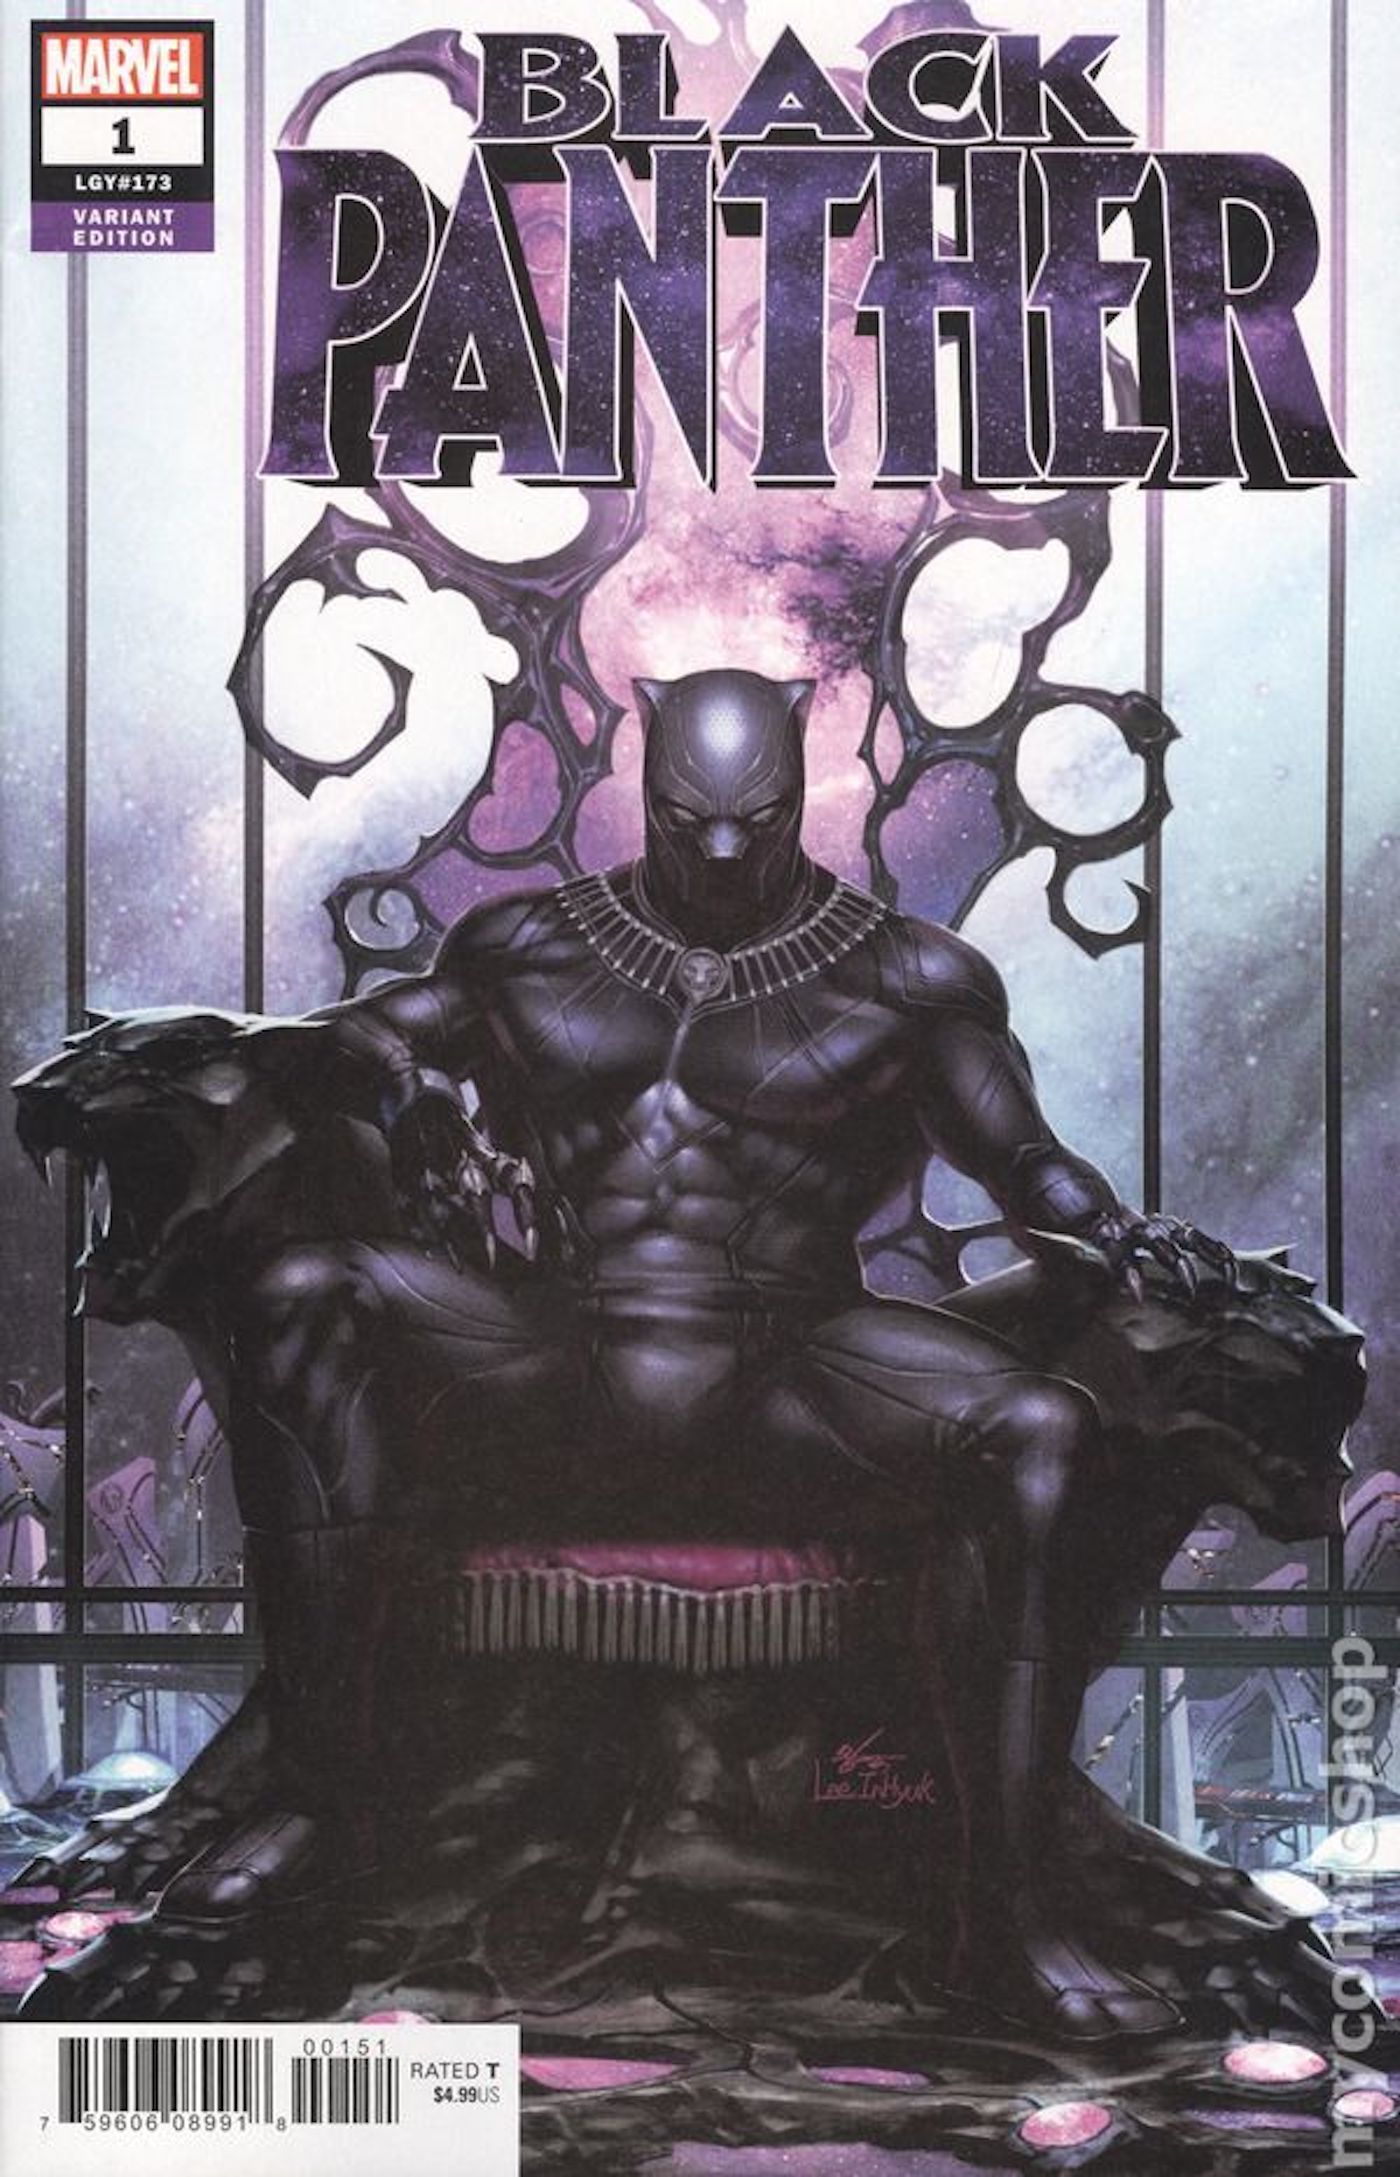 4. Black Panther 1 throne